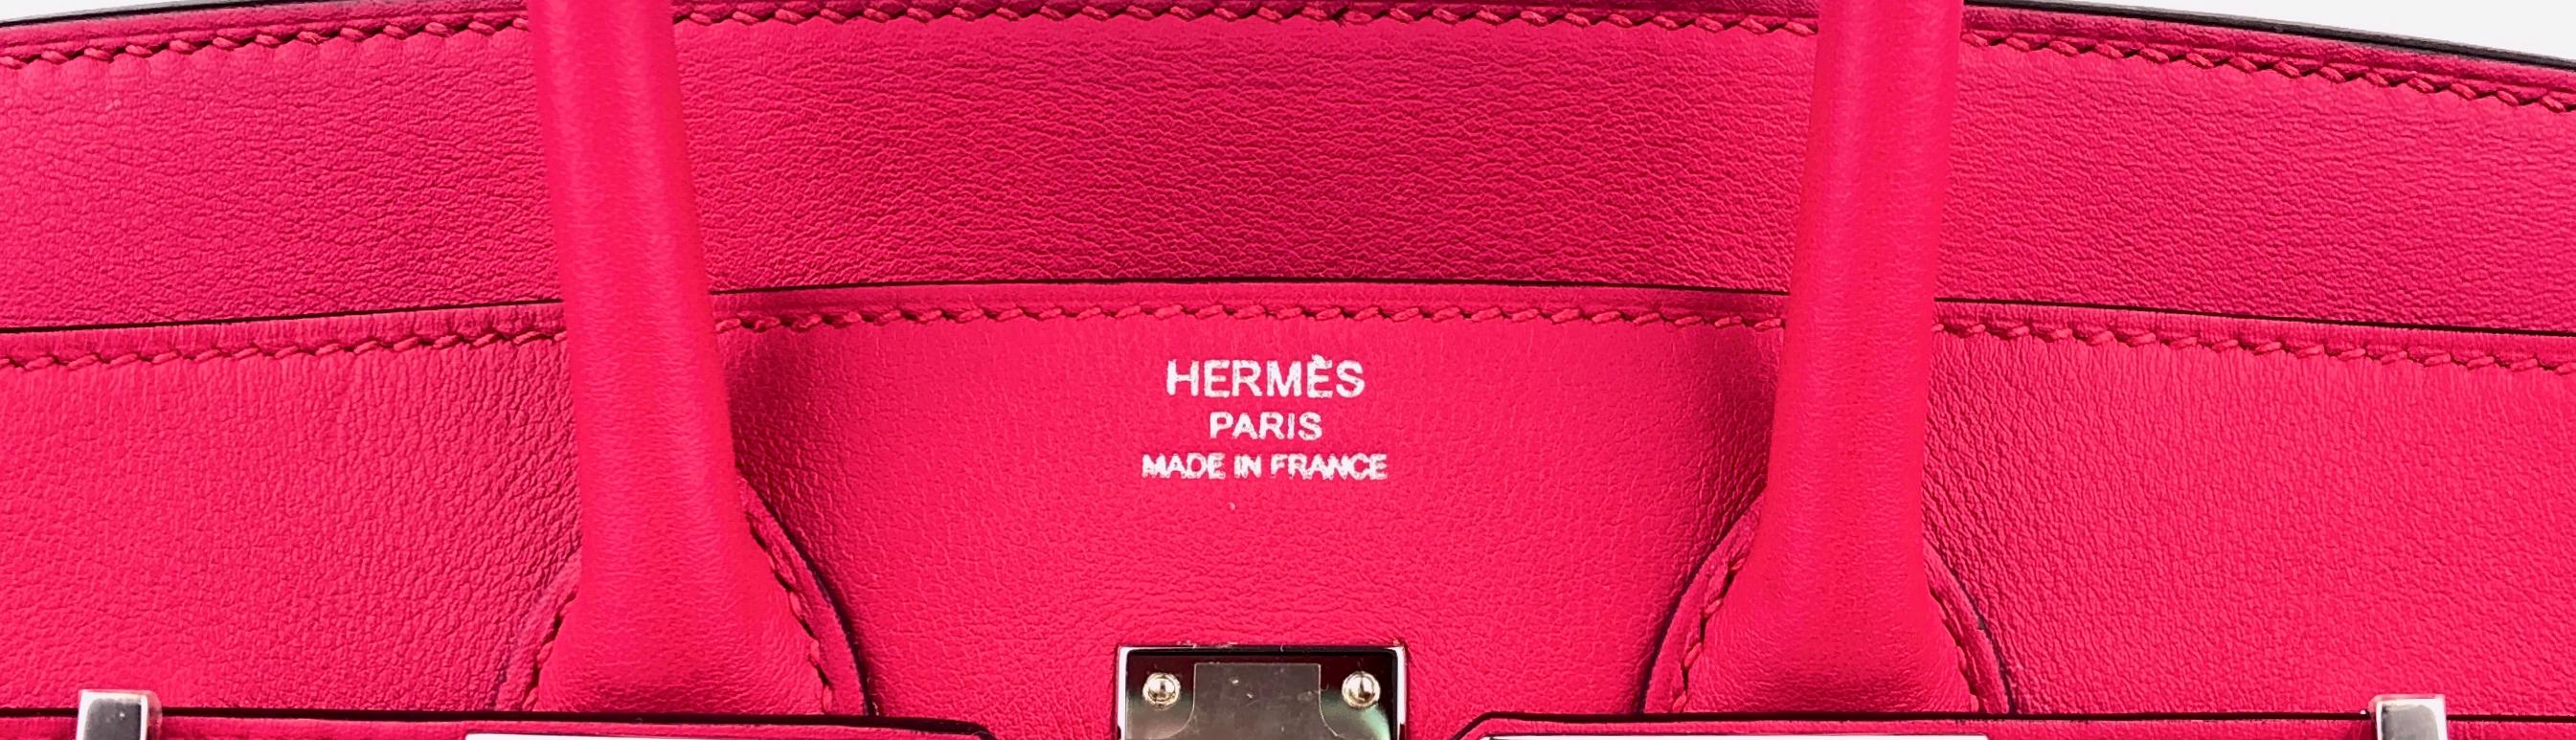 Women's or Men's Hermes Birkin 25 Framboise Pink Red Leather Handbag Bag Palladium Hardware RARE